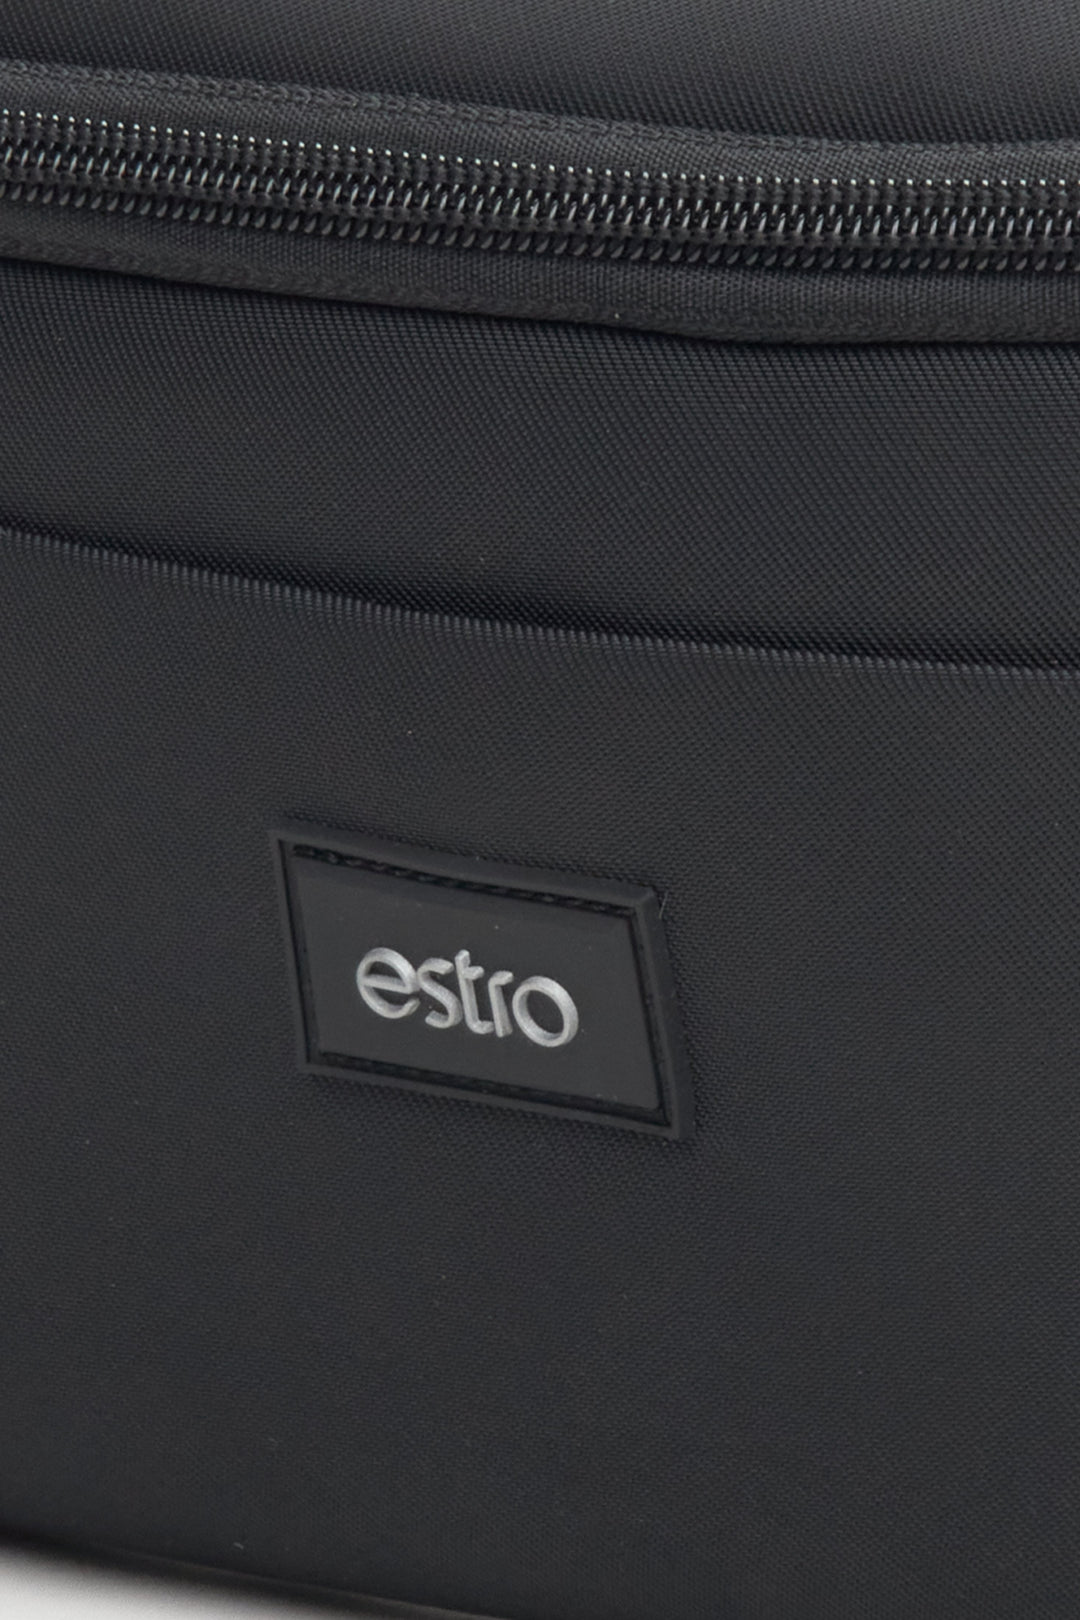 Men's black waist bag by Estro - close-up on details.